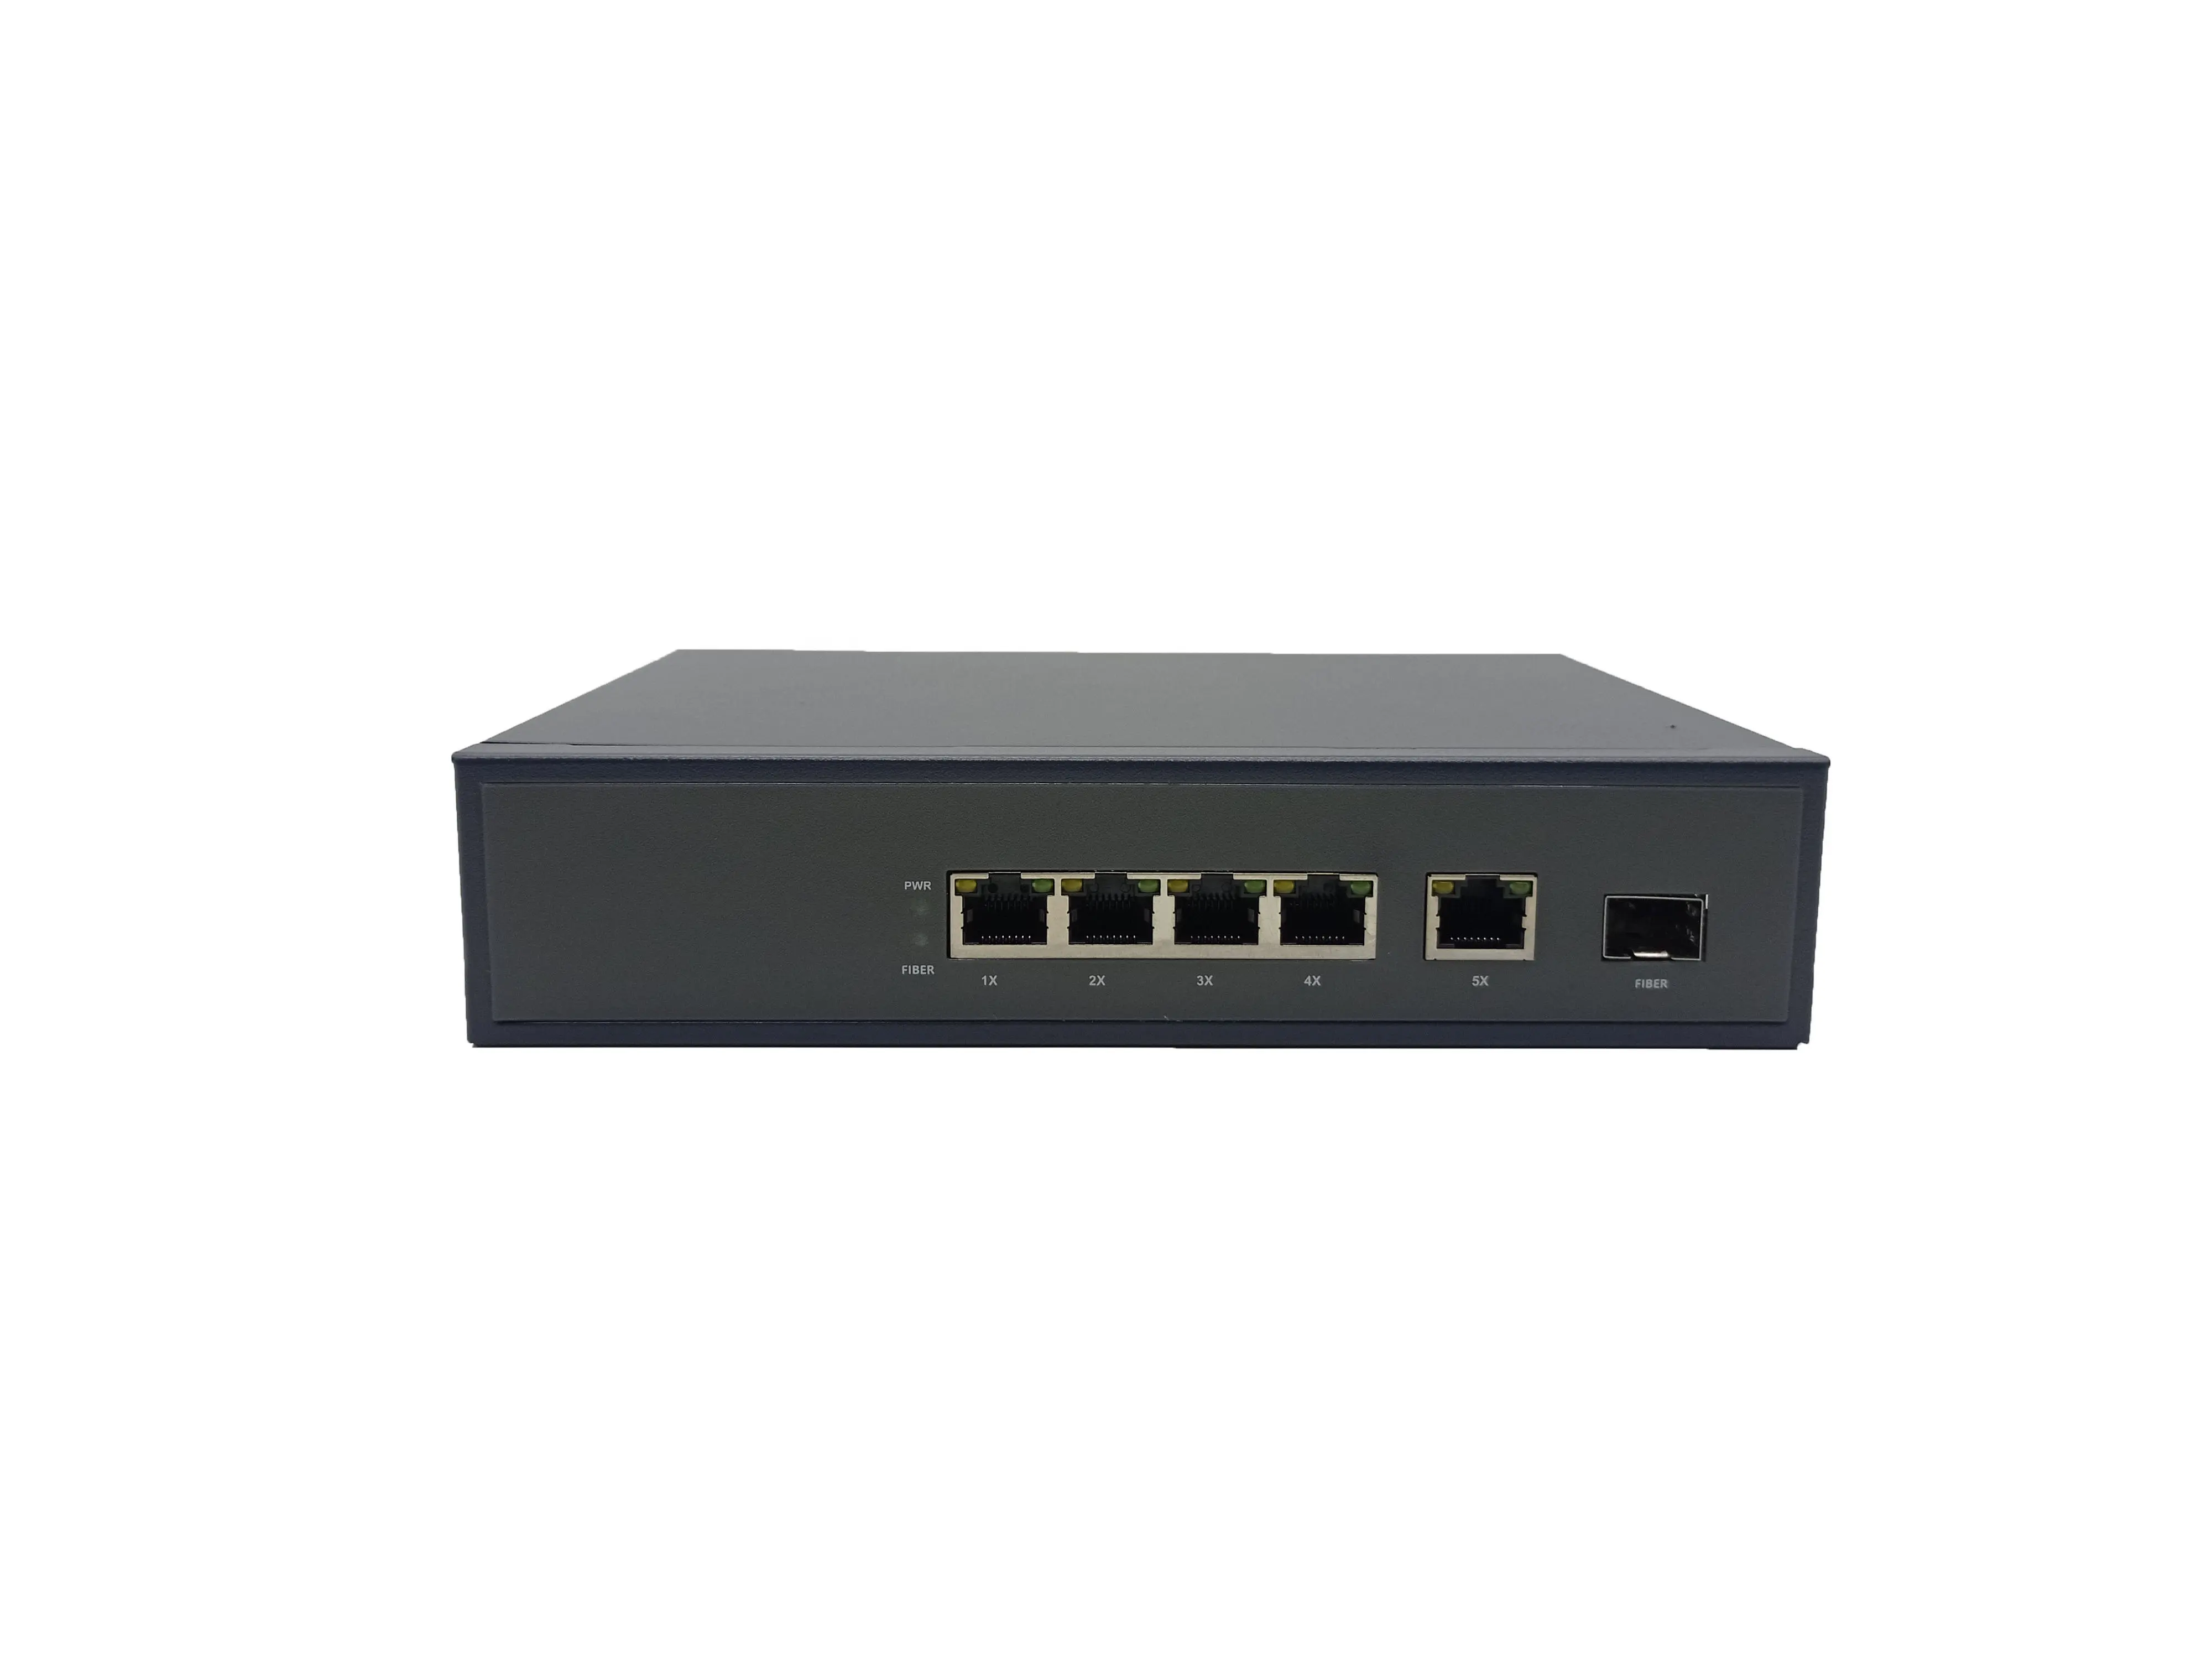 Hot-Verkoop 4-poort CCTV IP-Netwerk Poe Switch Met 1X1000M Rj45 En 1sfp Gigabit Voor Cctv Ip-Camera